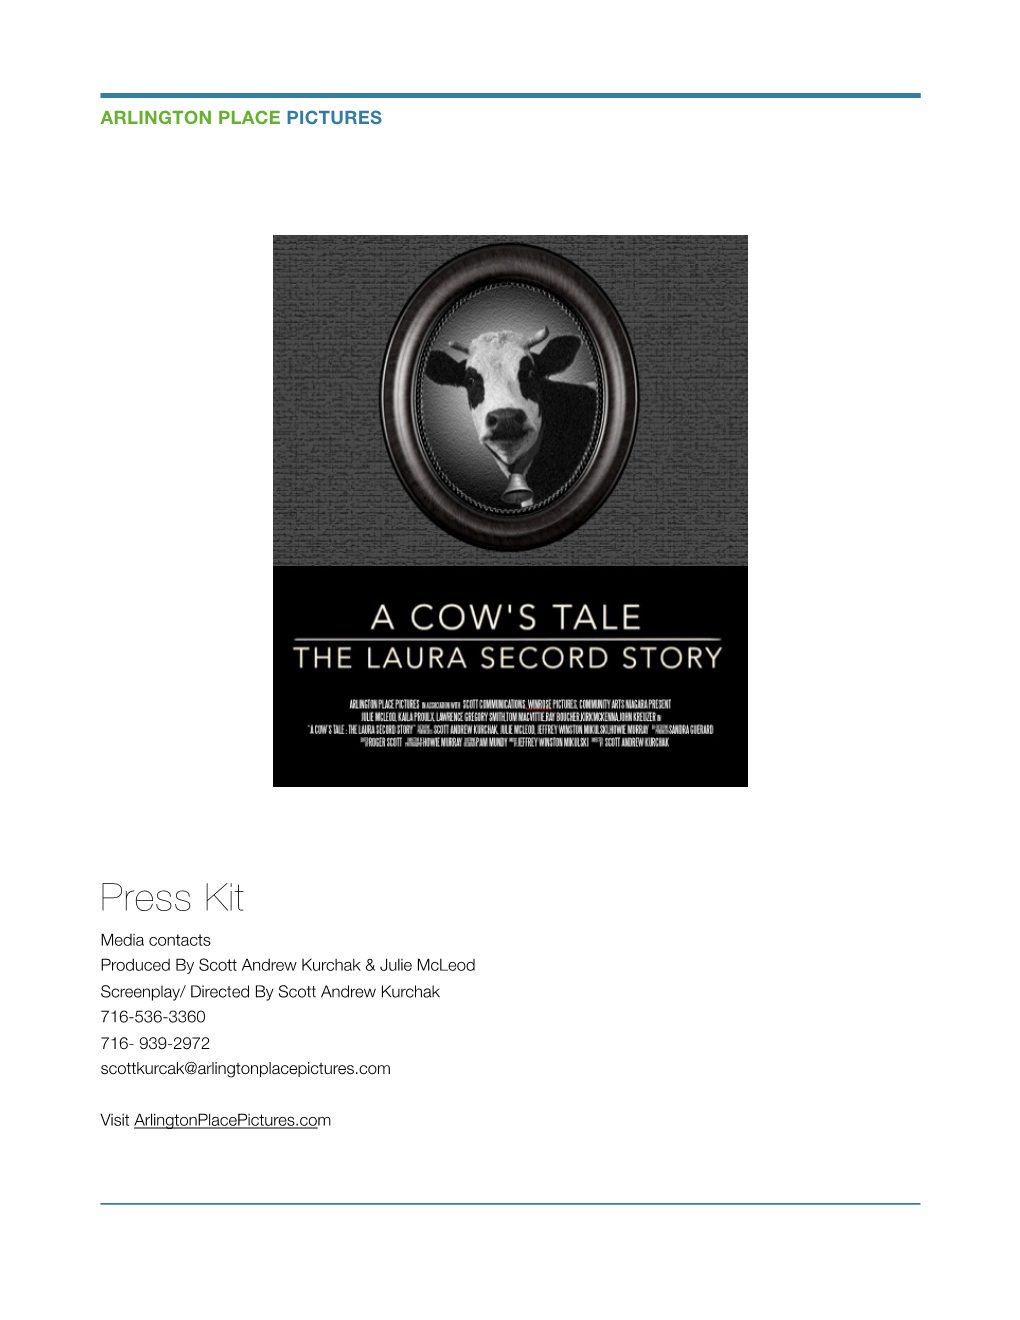 A Cow's Tale Press Kit 1